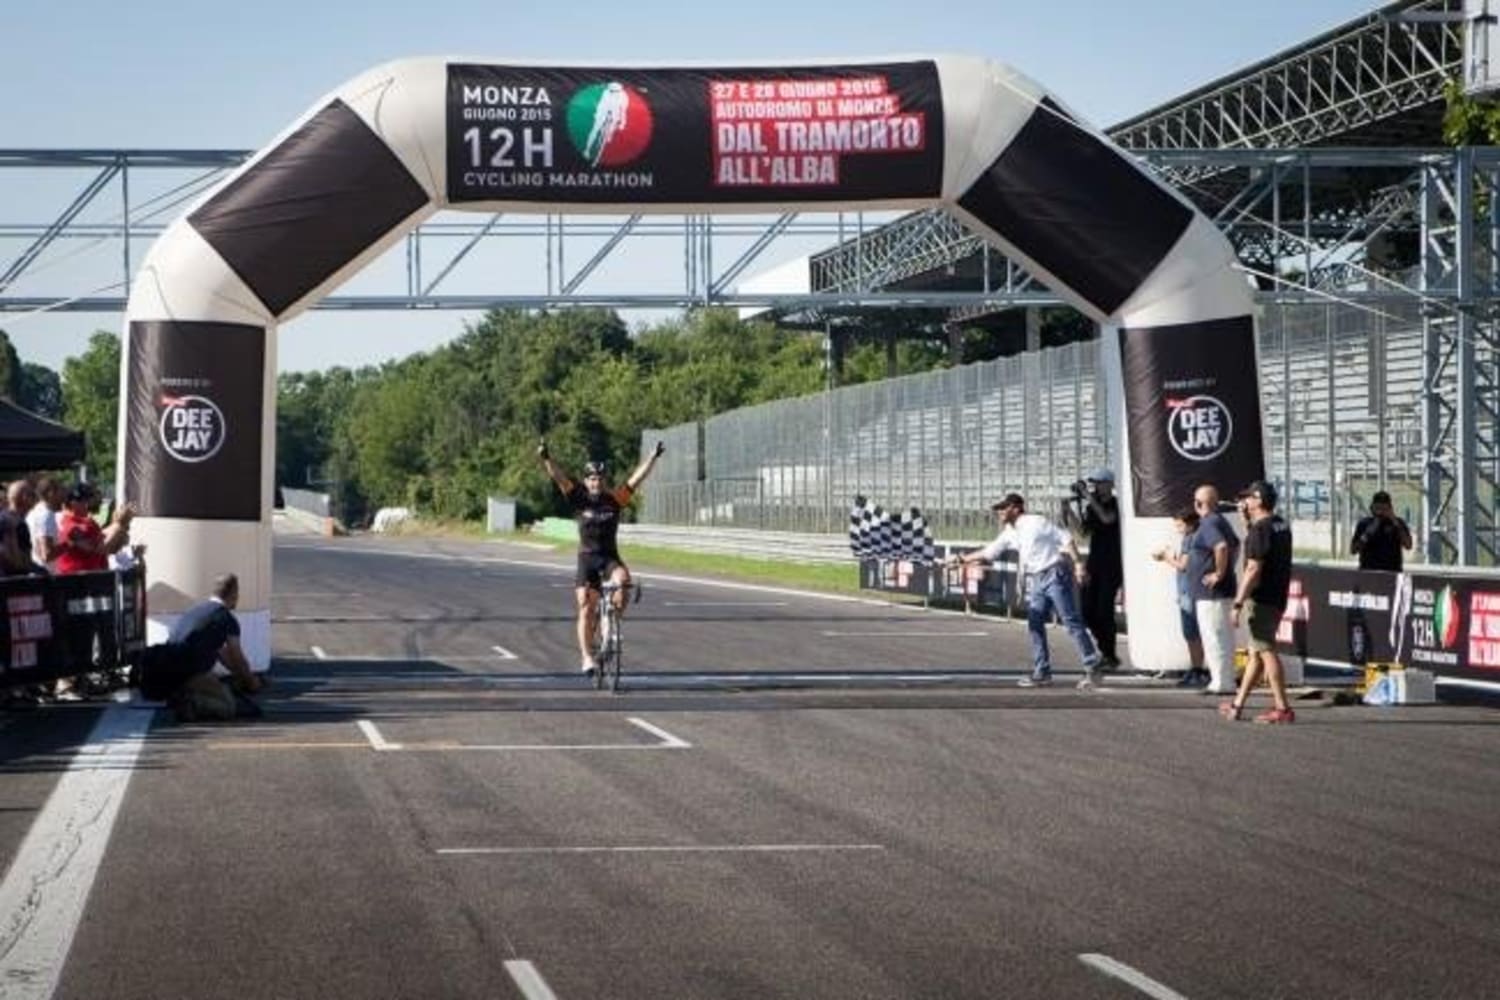 12H Cycling Marathon Monza Report